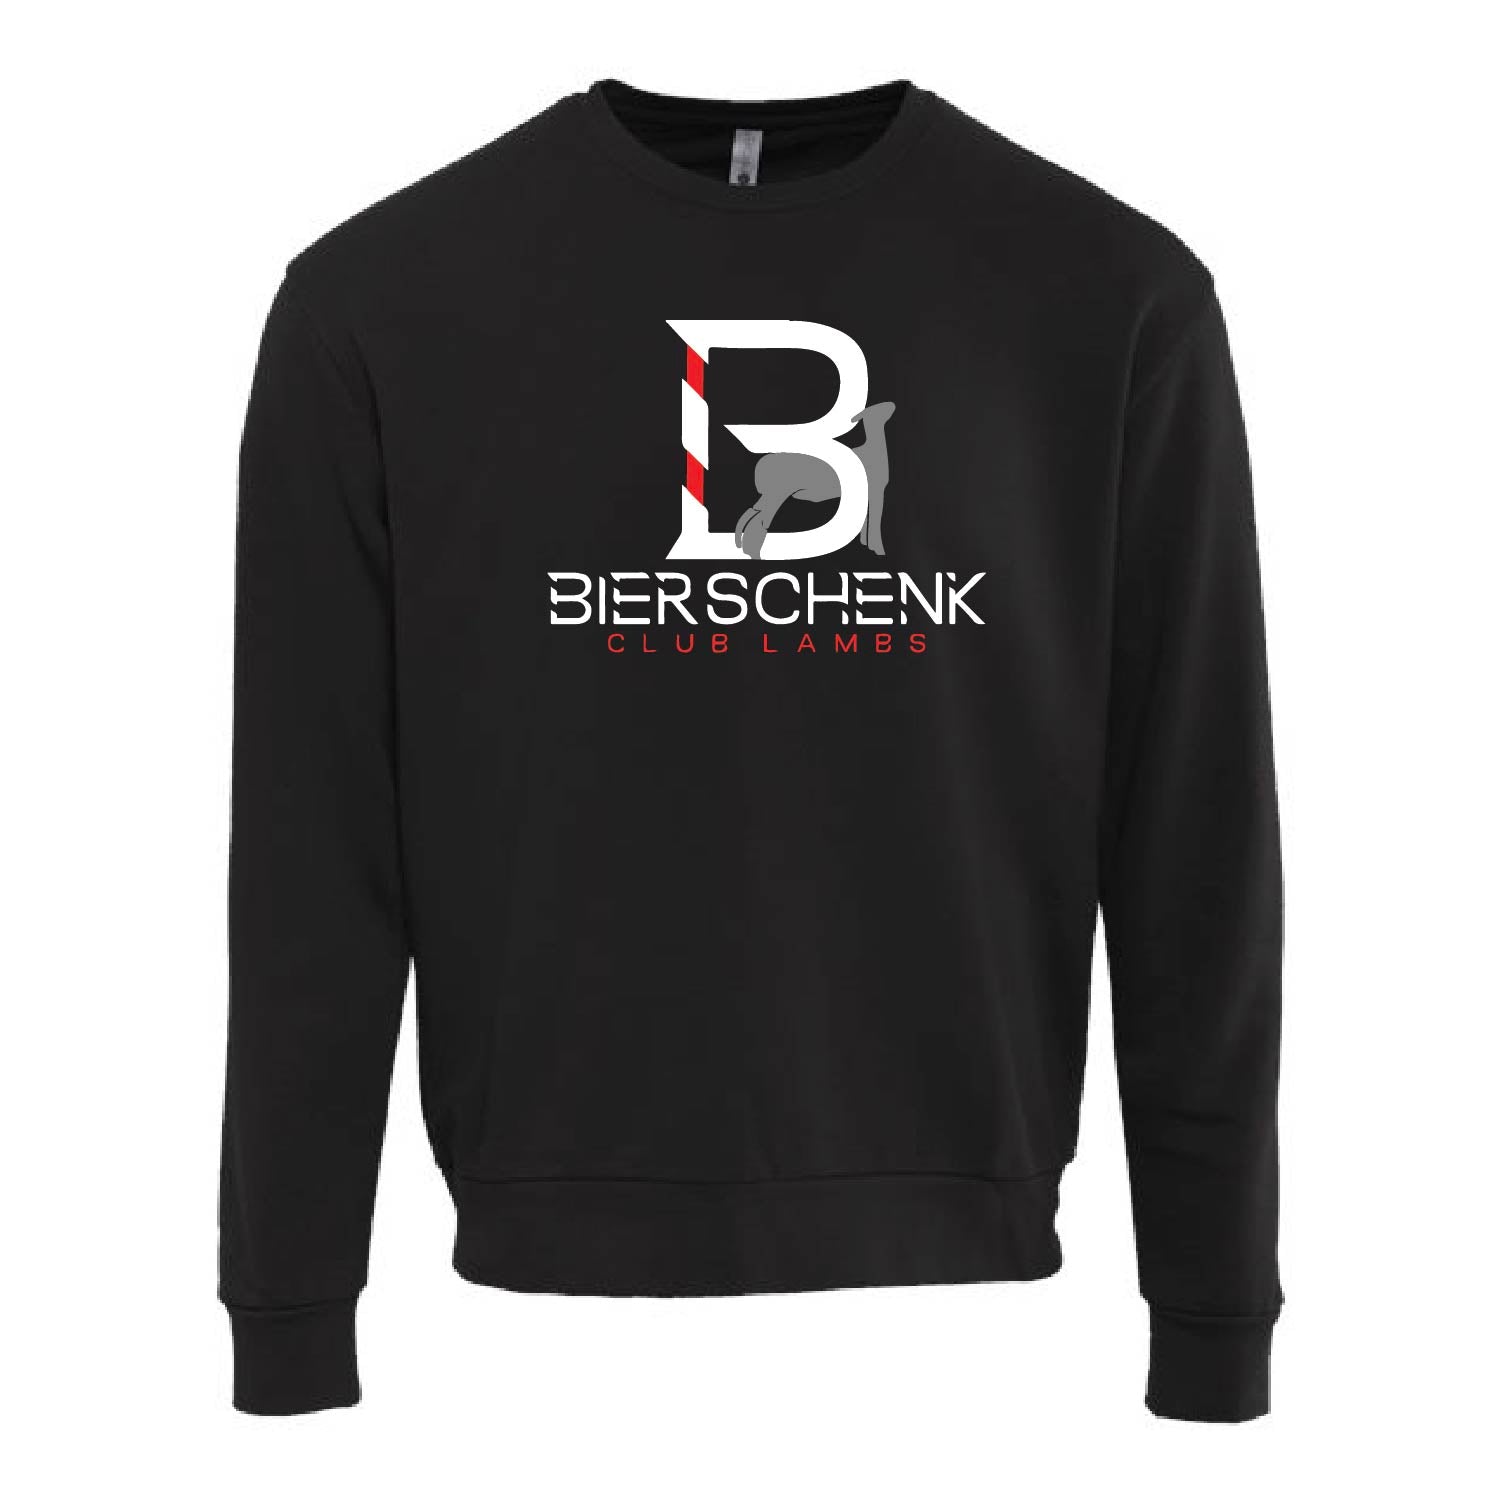 Bierschenk Club Lambs Sweatshirts